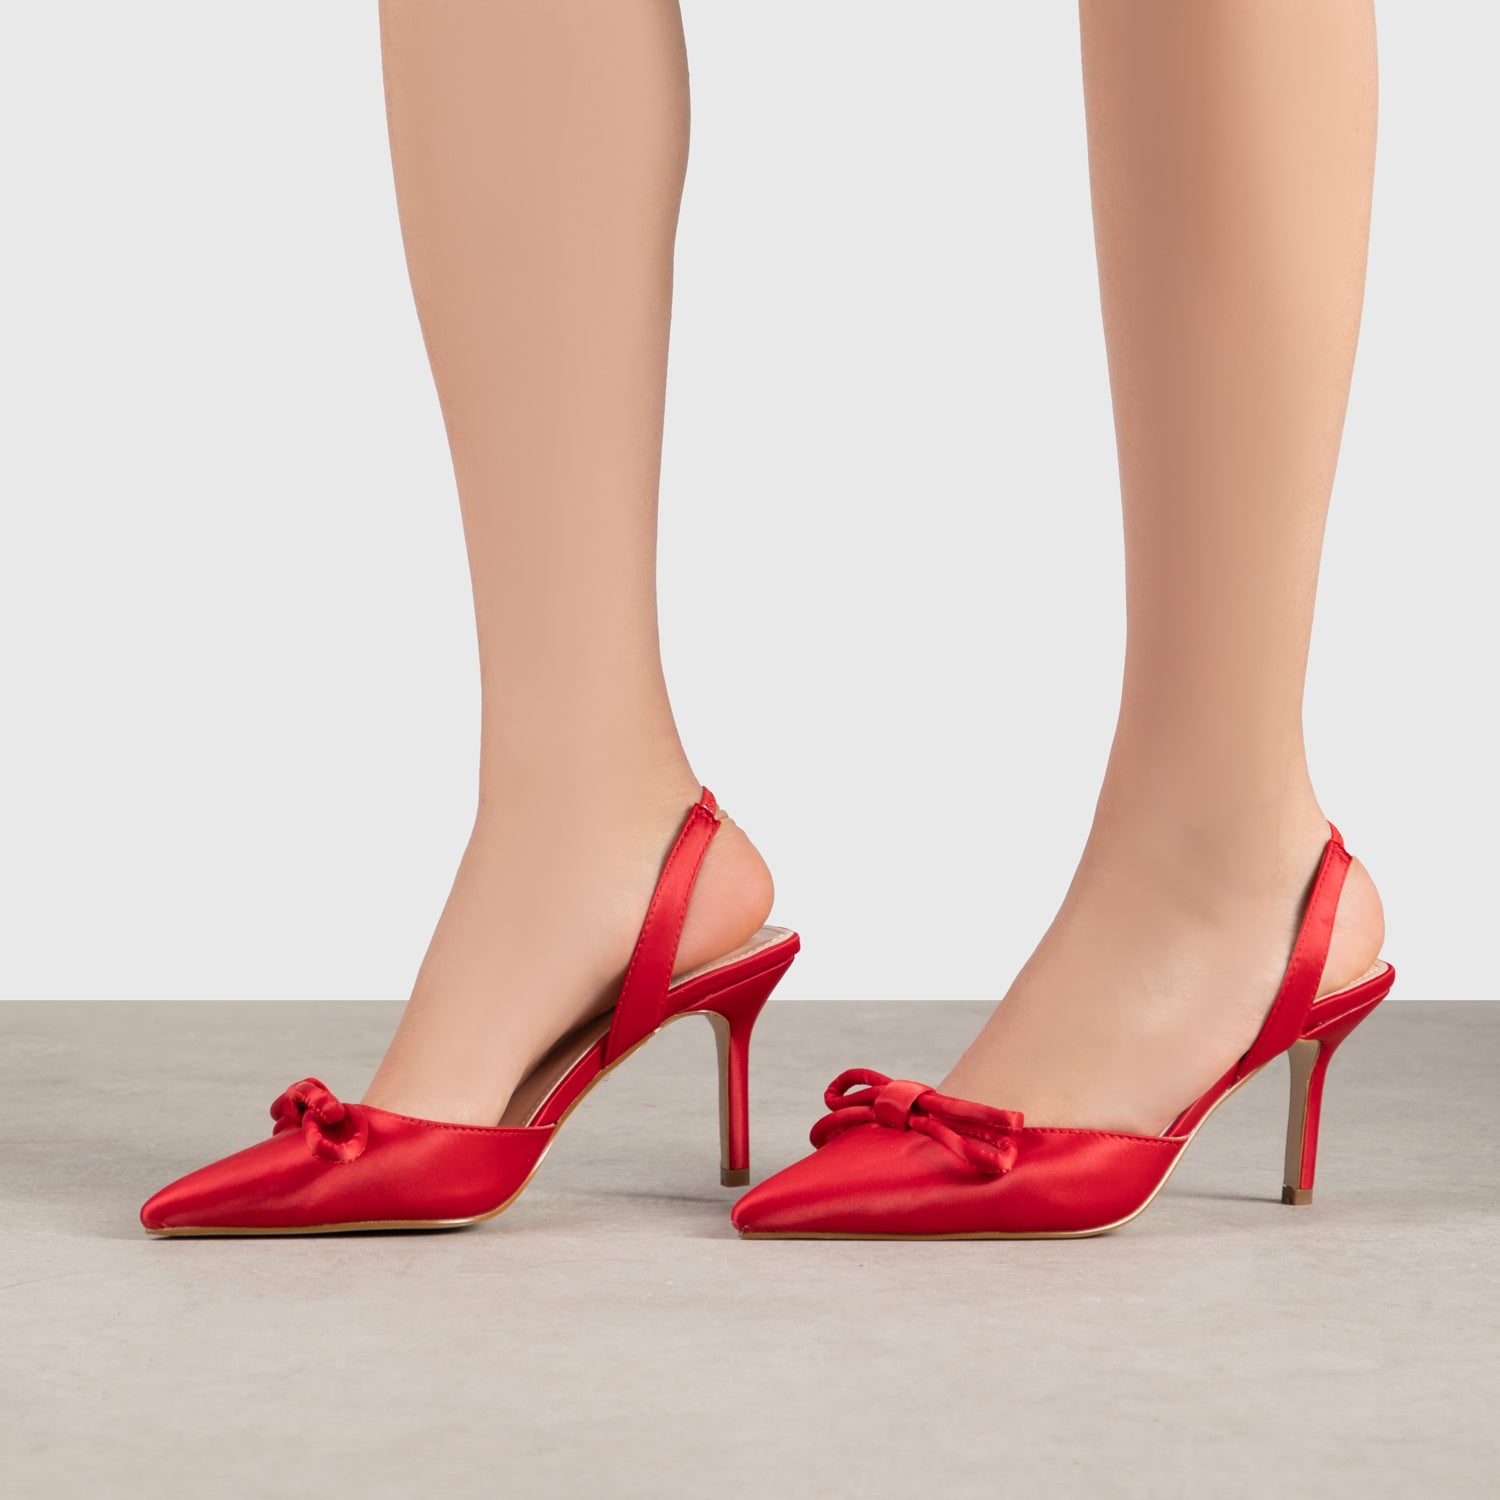 RAID Elenaa Heeled Sandals in Red Satin